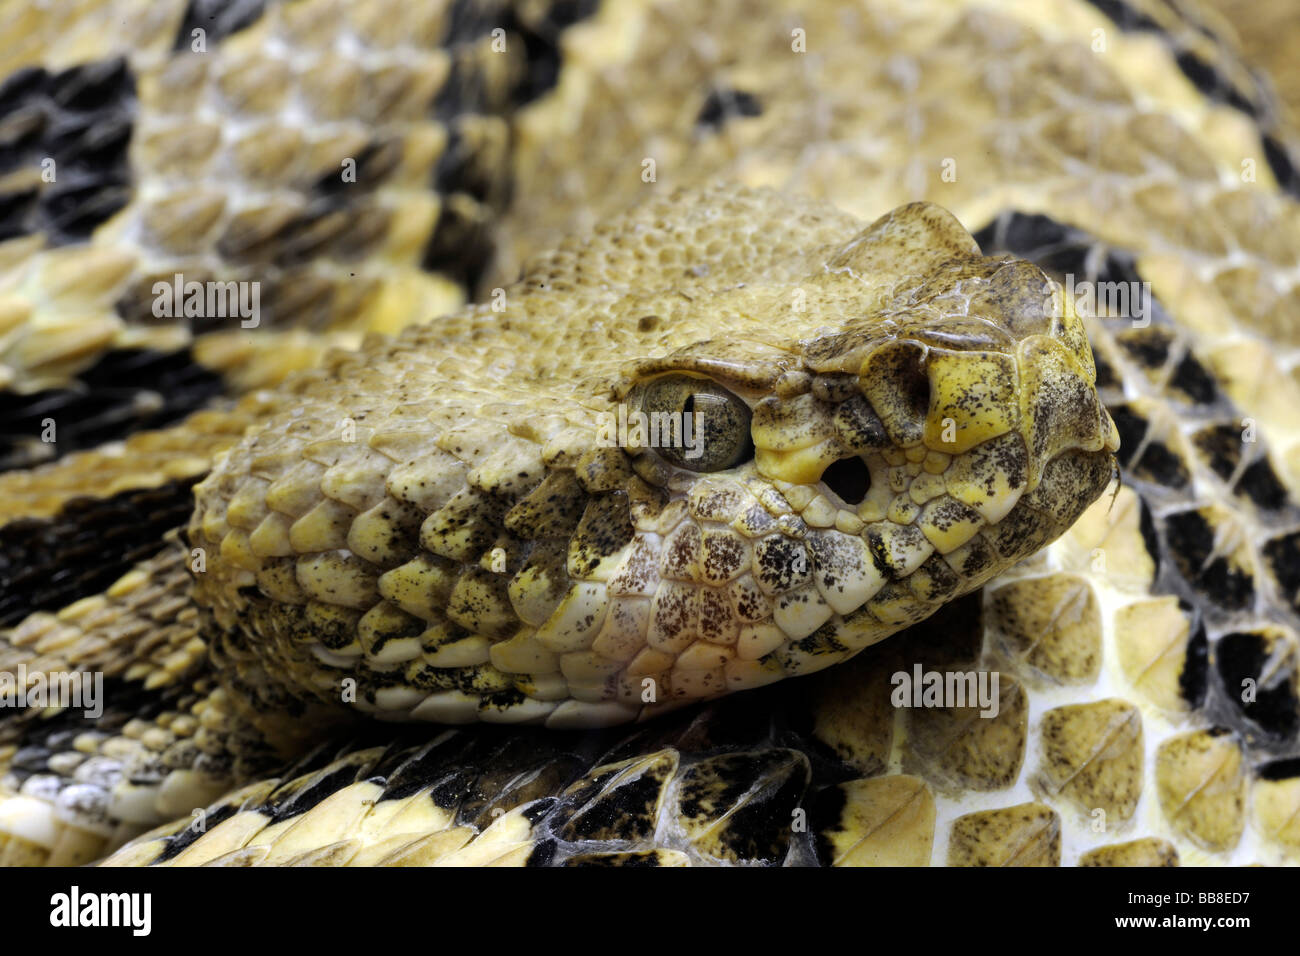 Timber rattlesnake, Canebrake rattlesnake, Banded rattlesnake (Crotalus horridus atricaudatus) Stock Photo